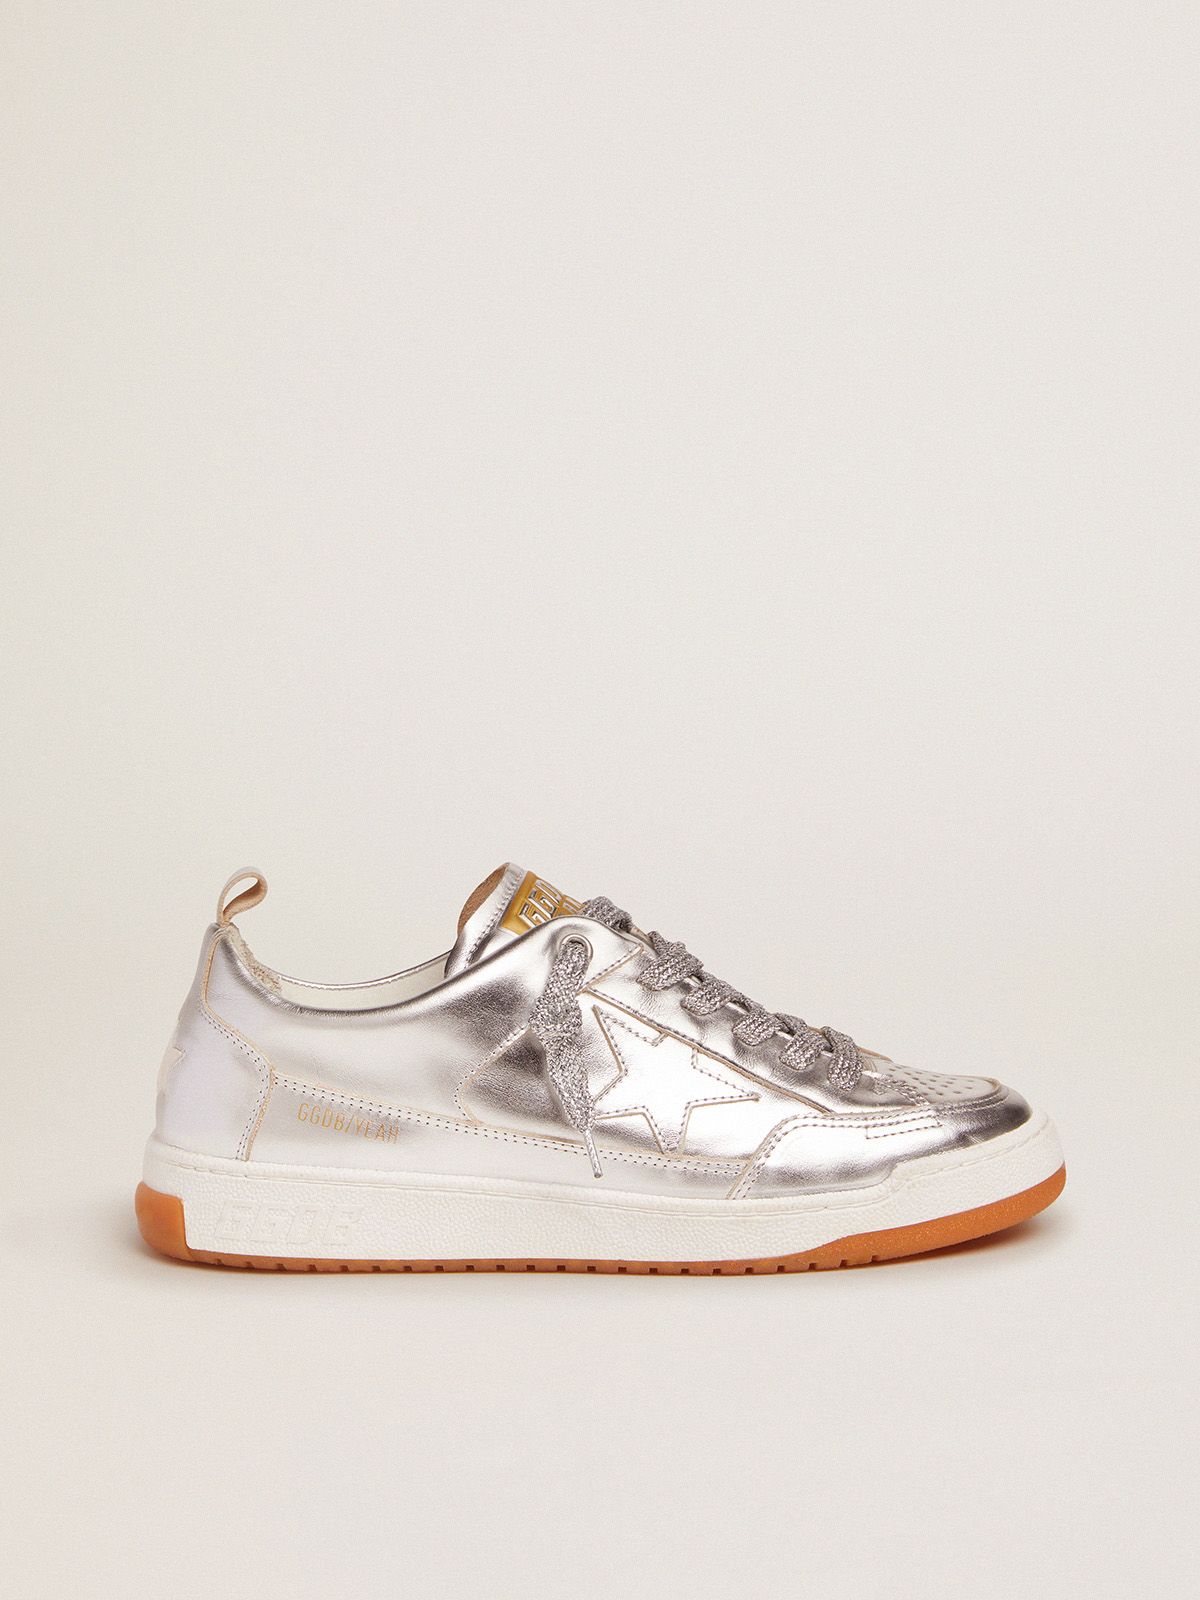 Saldi Golden Goose Uomo Yeah sneakers in silver laminated leather